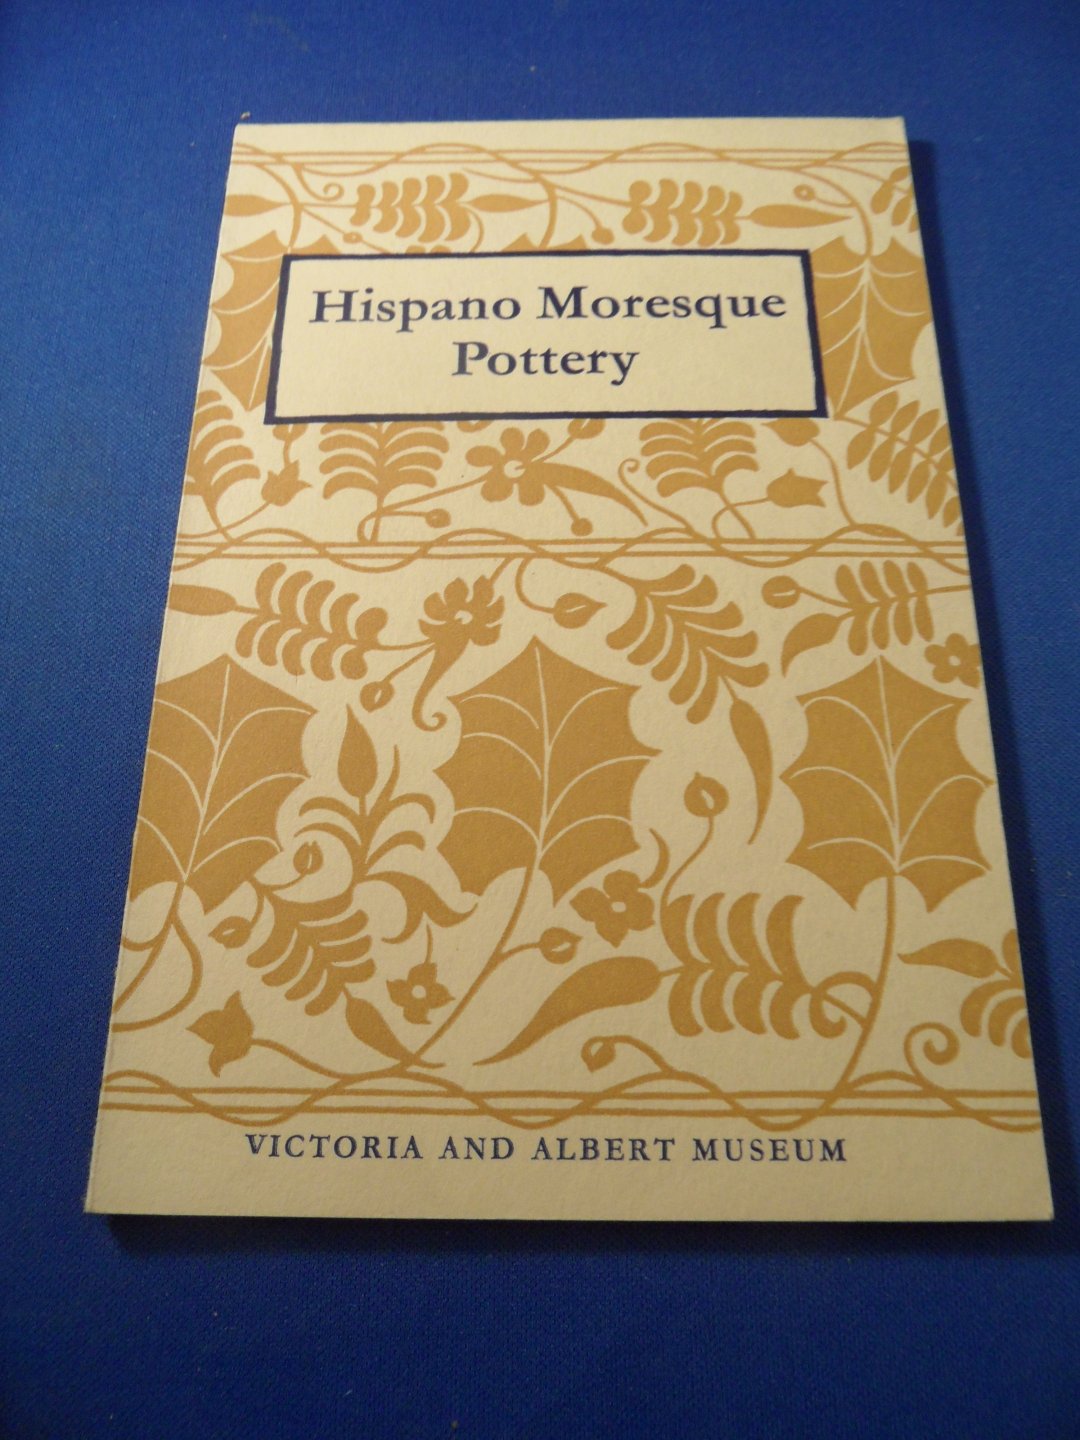  - Hispano Moresque Pottery